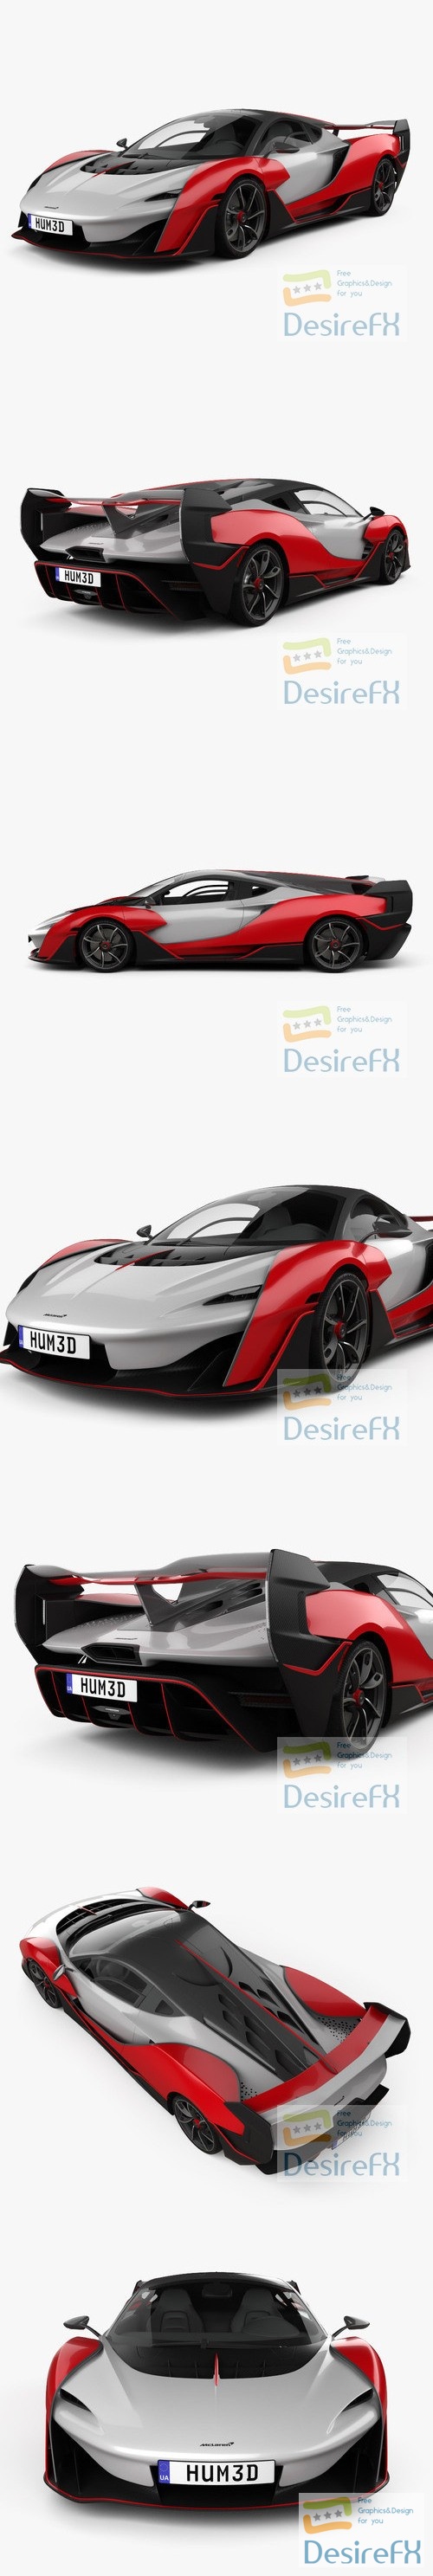 McLaren Sabre 2021 3D Model